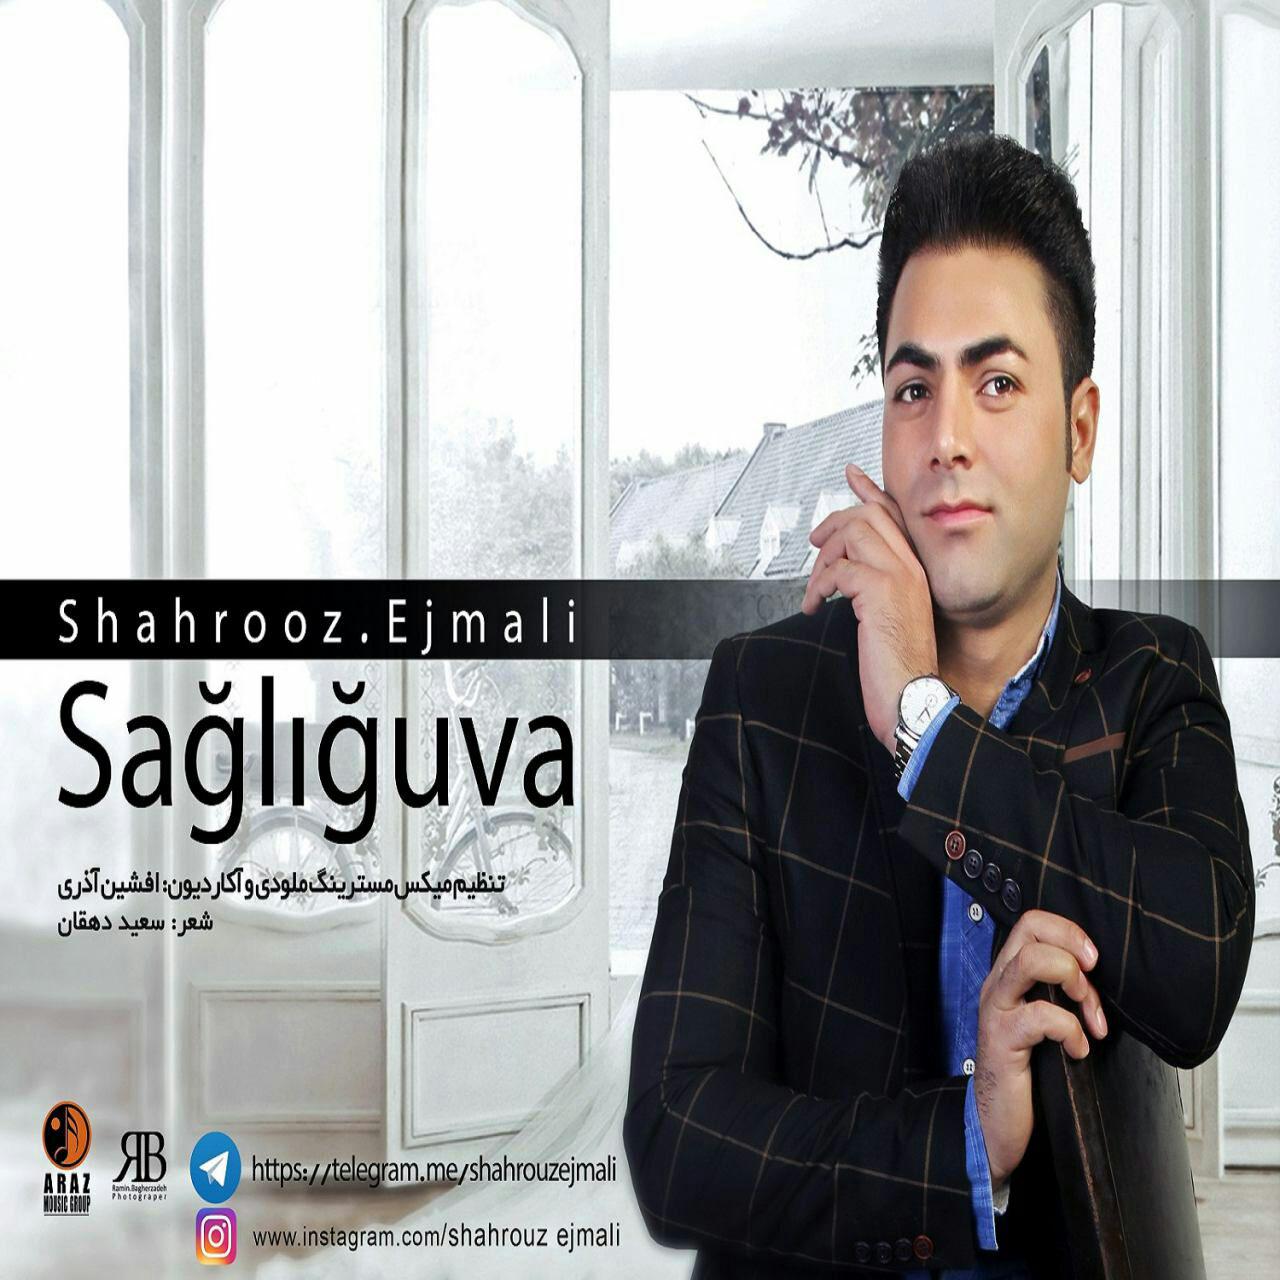 Shahrooz Ejmali – Saghlighova